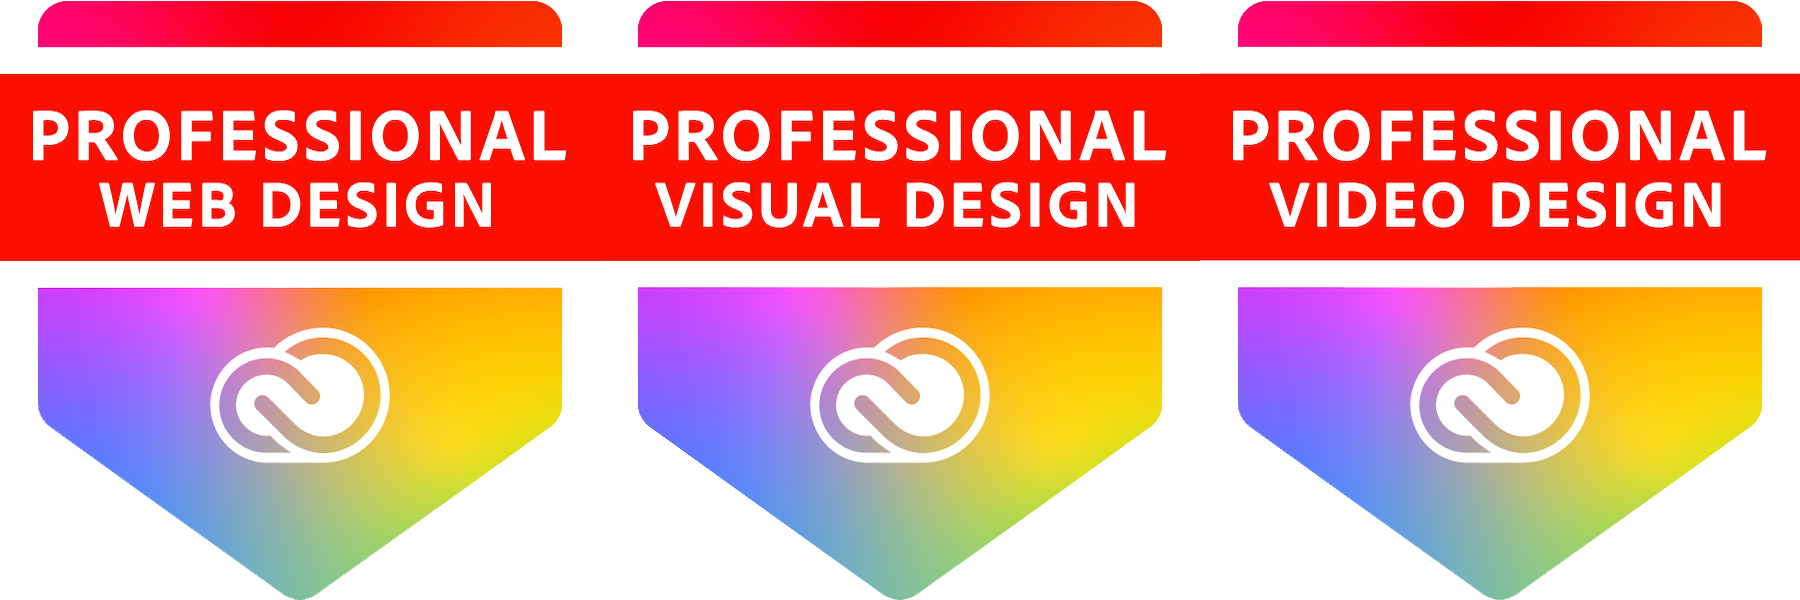 Adobe Certified Professional Video Visual Web Design